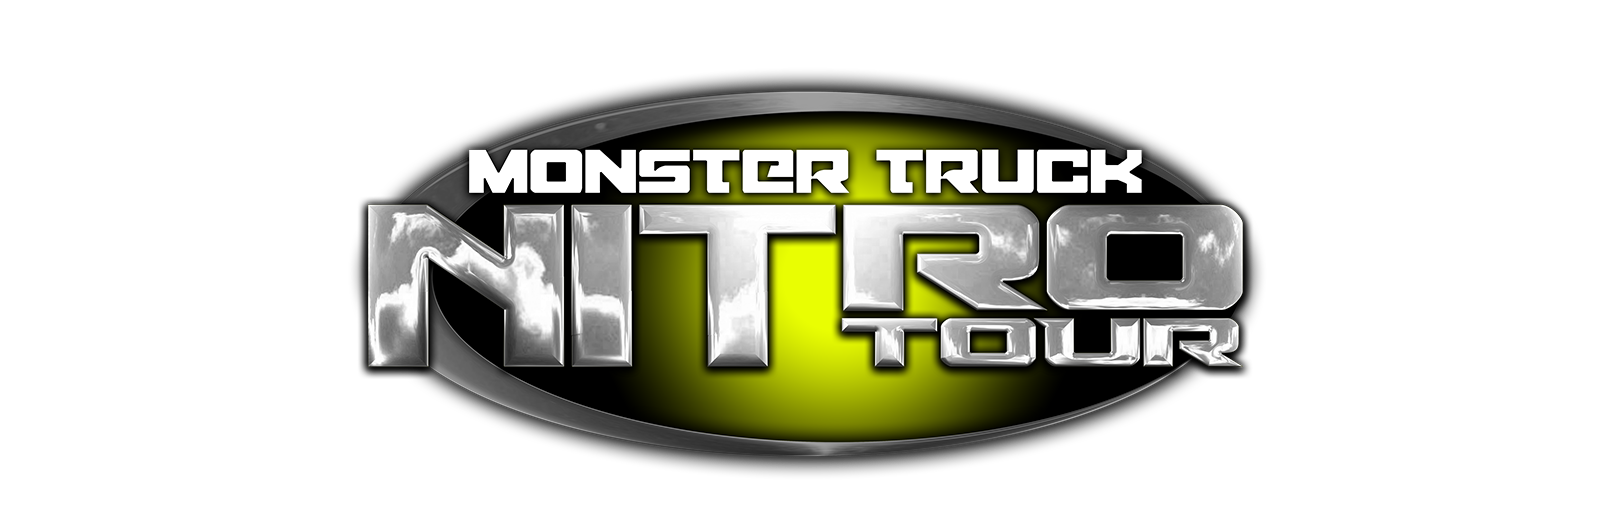 Monster Jam Jax: Big trucks and a Downtown traffic jam